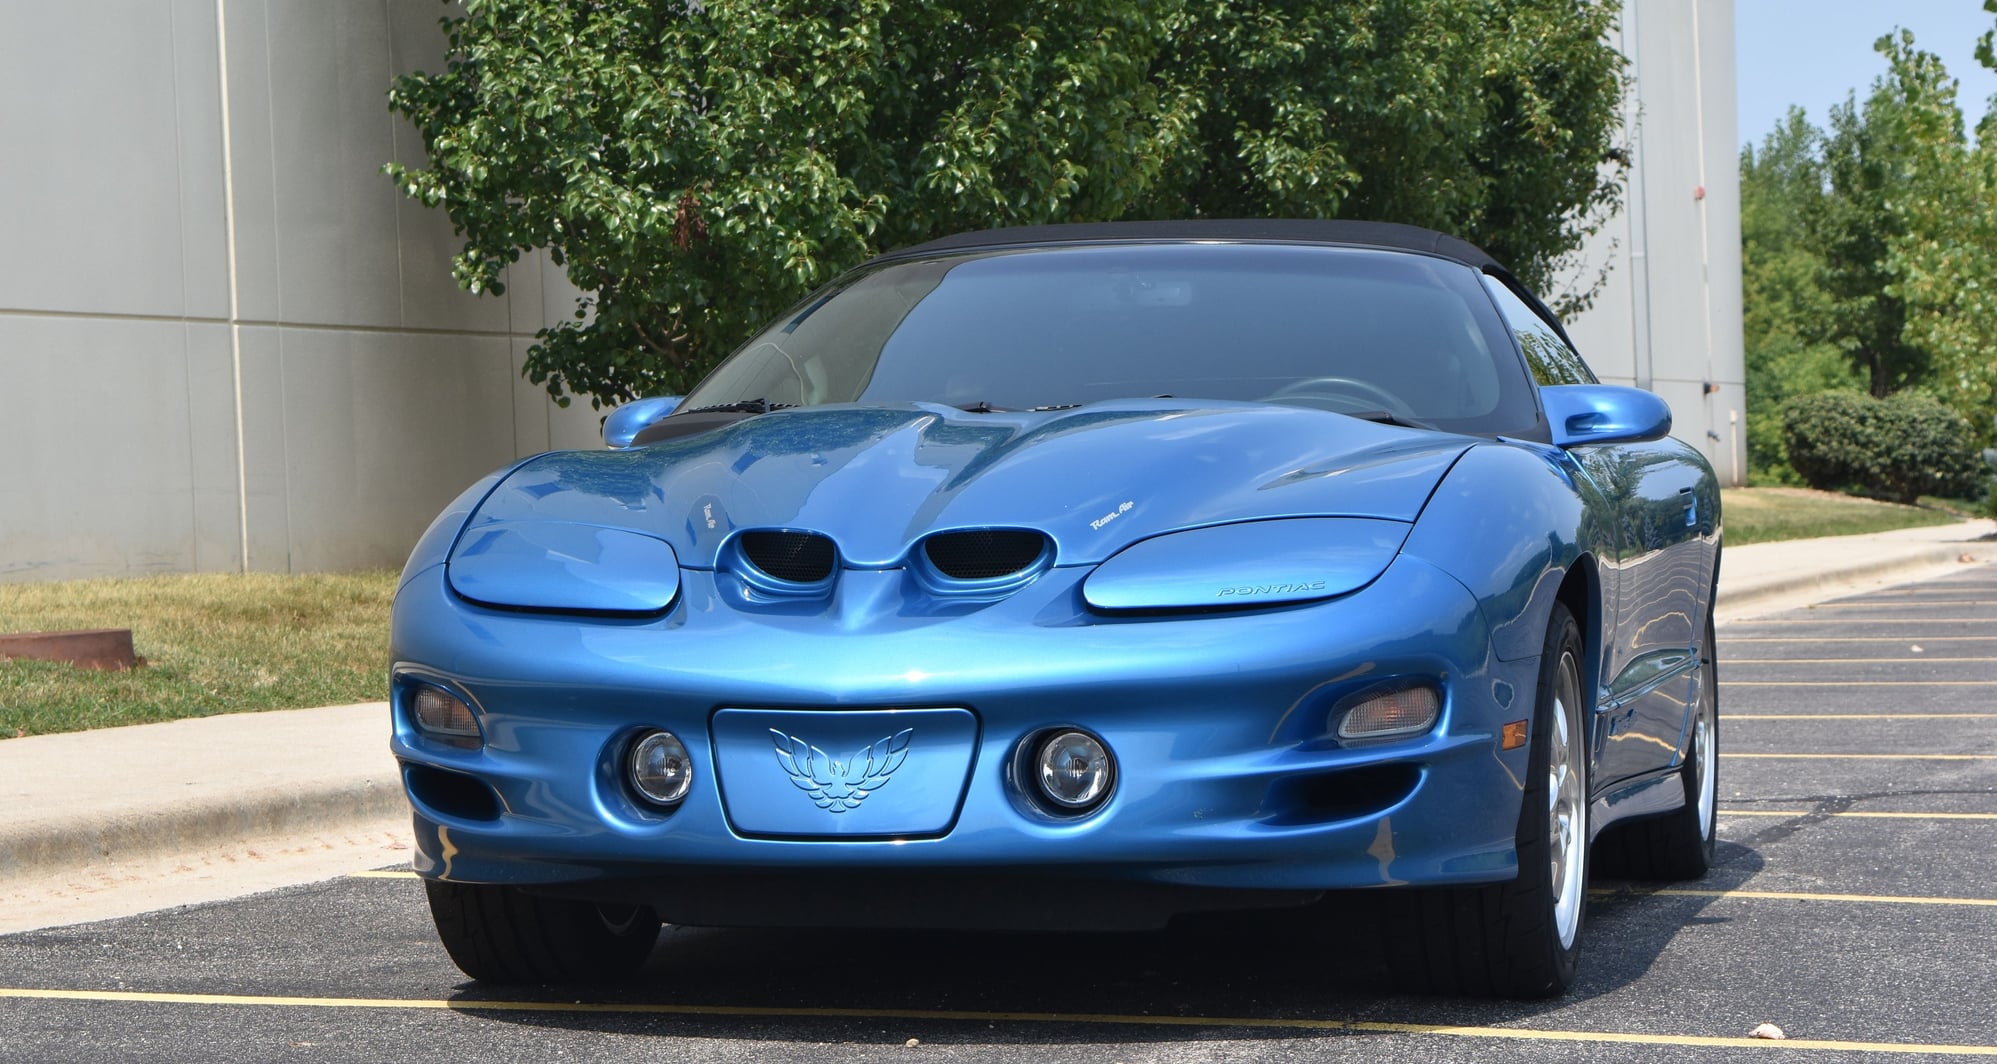 1999 Pontiac Firebird - 1999 Trans AM Convertible - Medium Blue Metallic 1 of 24 - Used - VIN 2G2FV32G0X2233154 - 91,000 Miles - 8 cyl - 2WD - Automatic - Convertible - Blue - Lake Zurich, IL 60047, United States